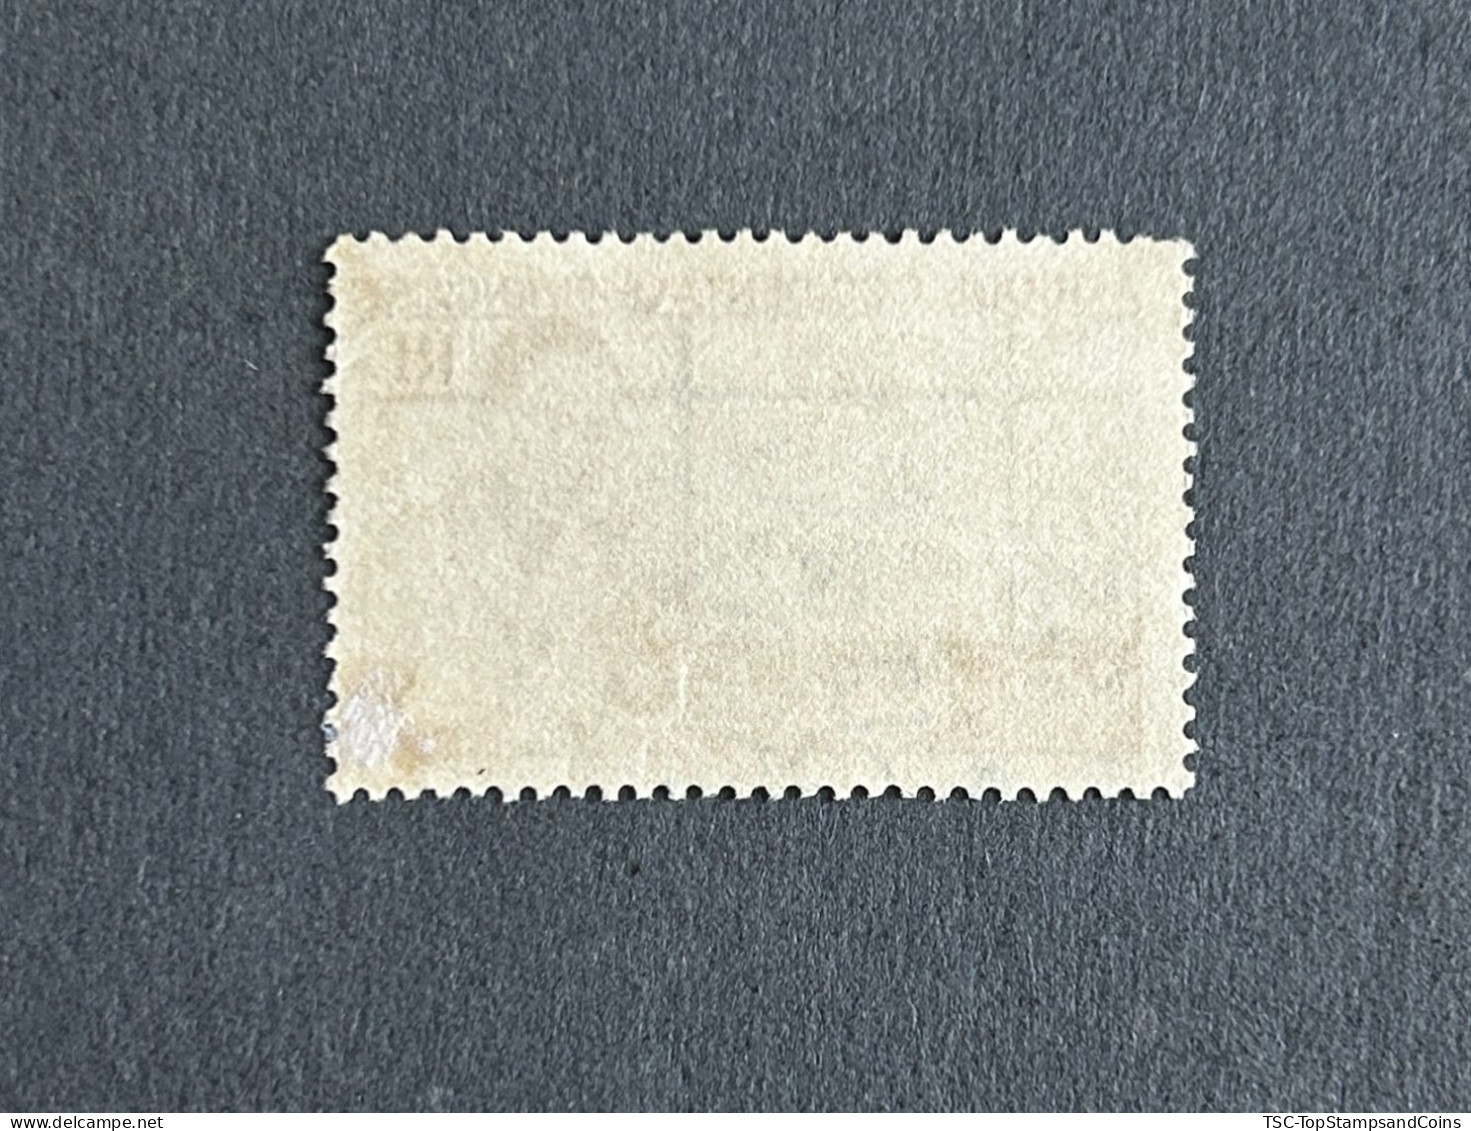 FRAWA0048U3 - Local People - Medical Laboratory - 15 F Used Stamp - AOF - 1953 - Gebruikt